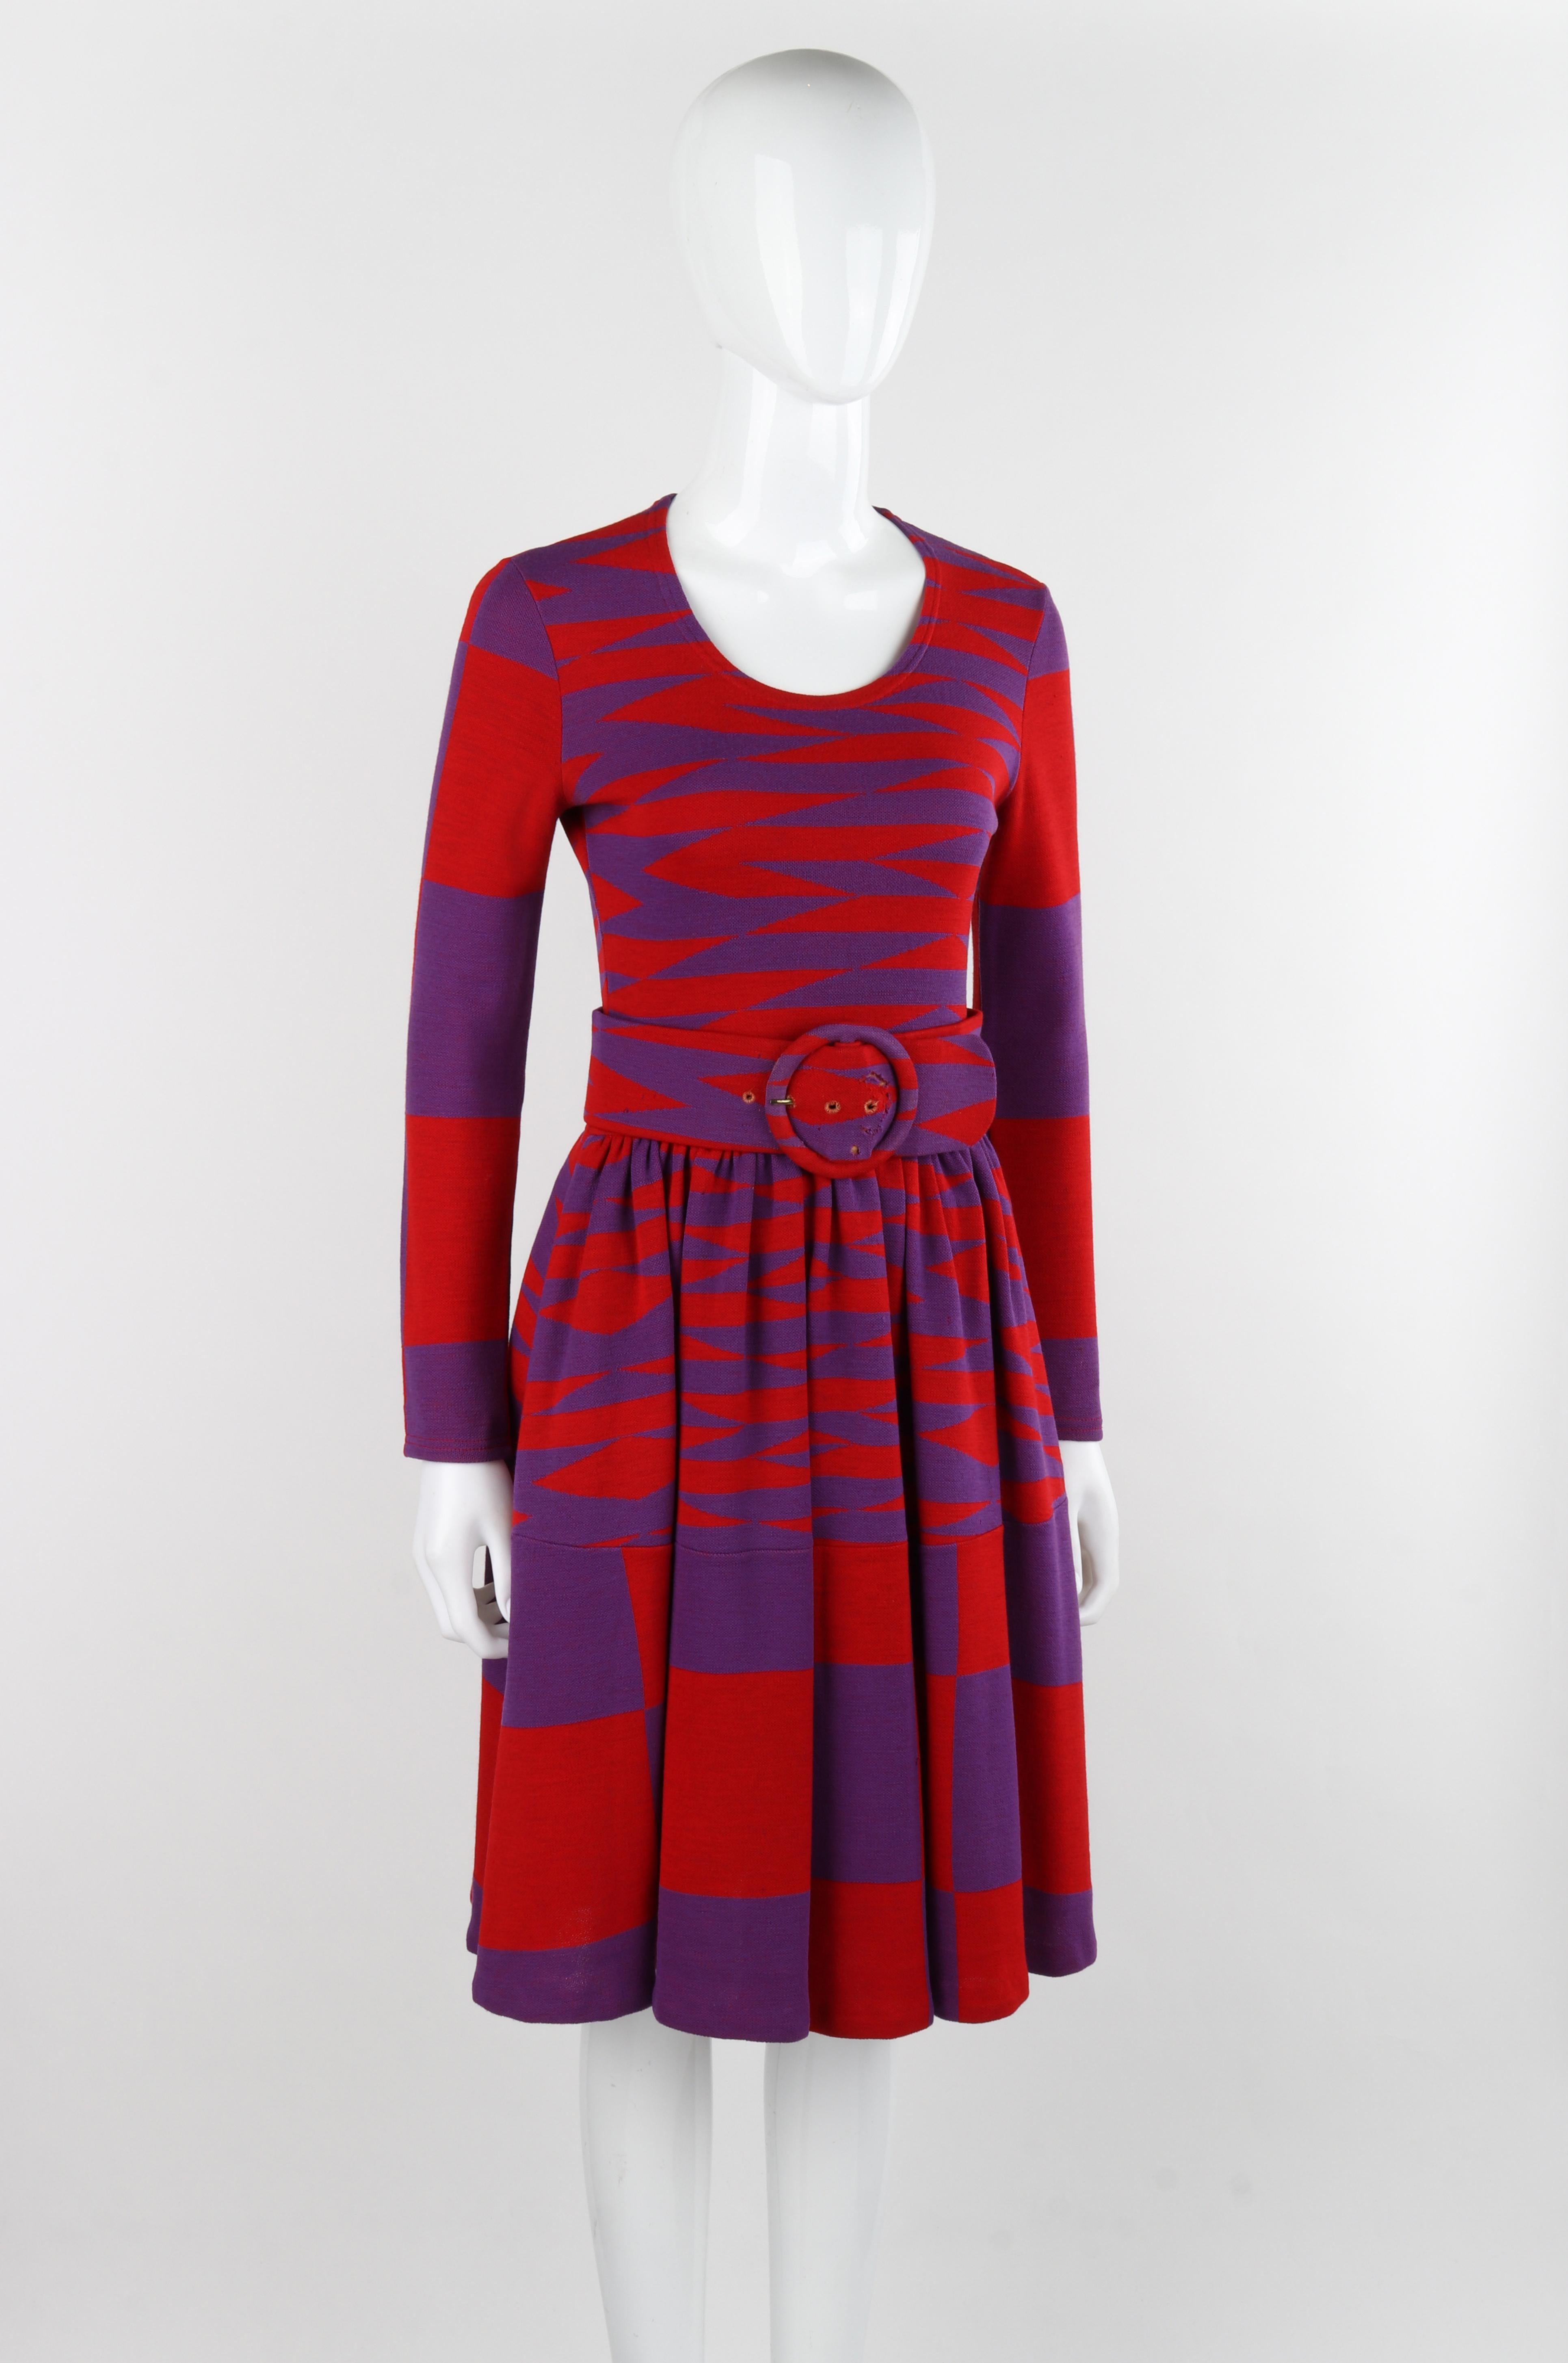 RUDI GERNREICH Harmon Knitwear c.1971 Purple Red Mod Op Art Wool Knit Day Dress In Good Condition For Sale In Thiensville, WI